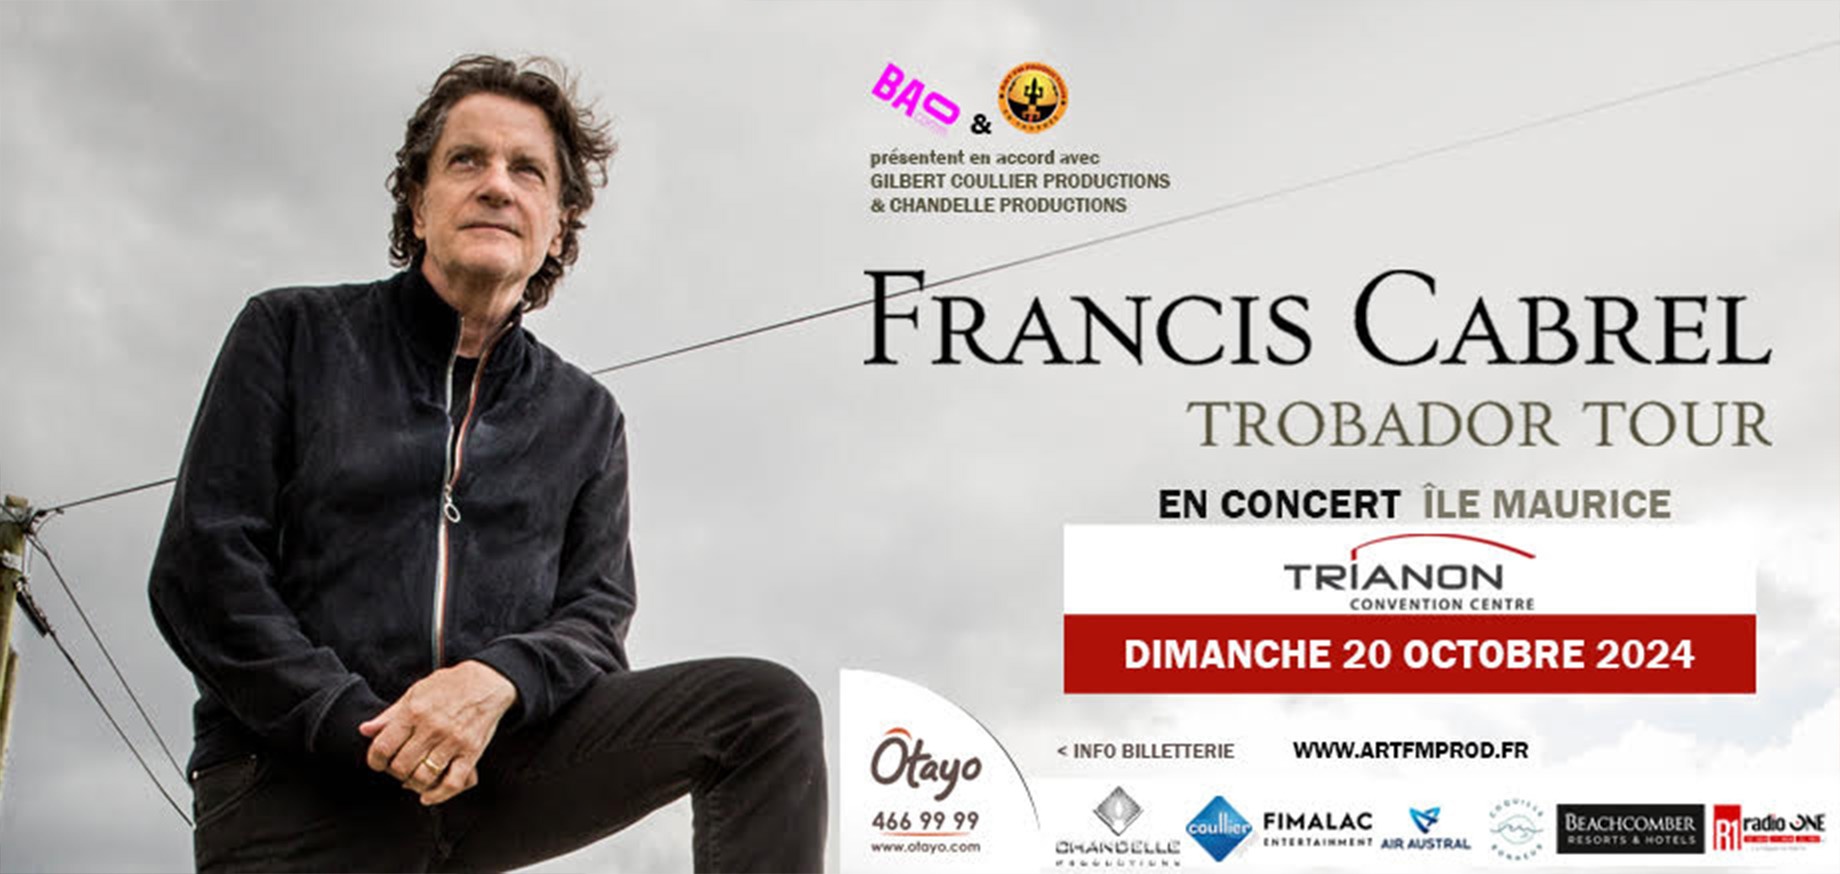 Francis Cabrel « Trobador Tour » slider image